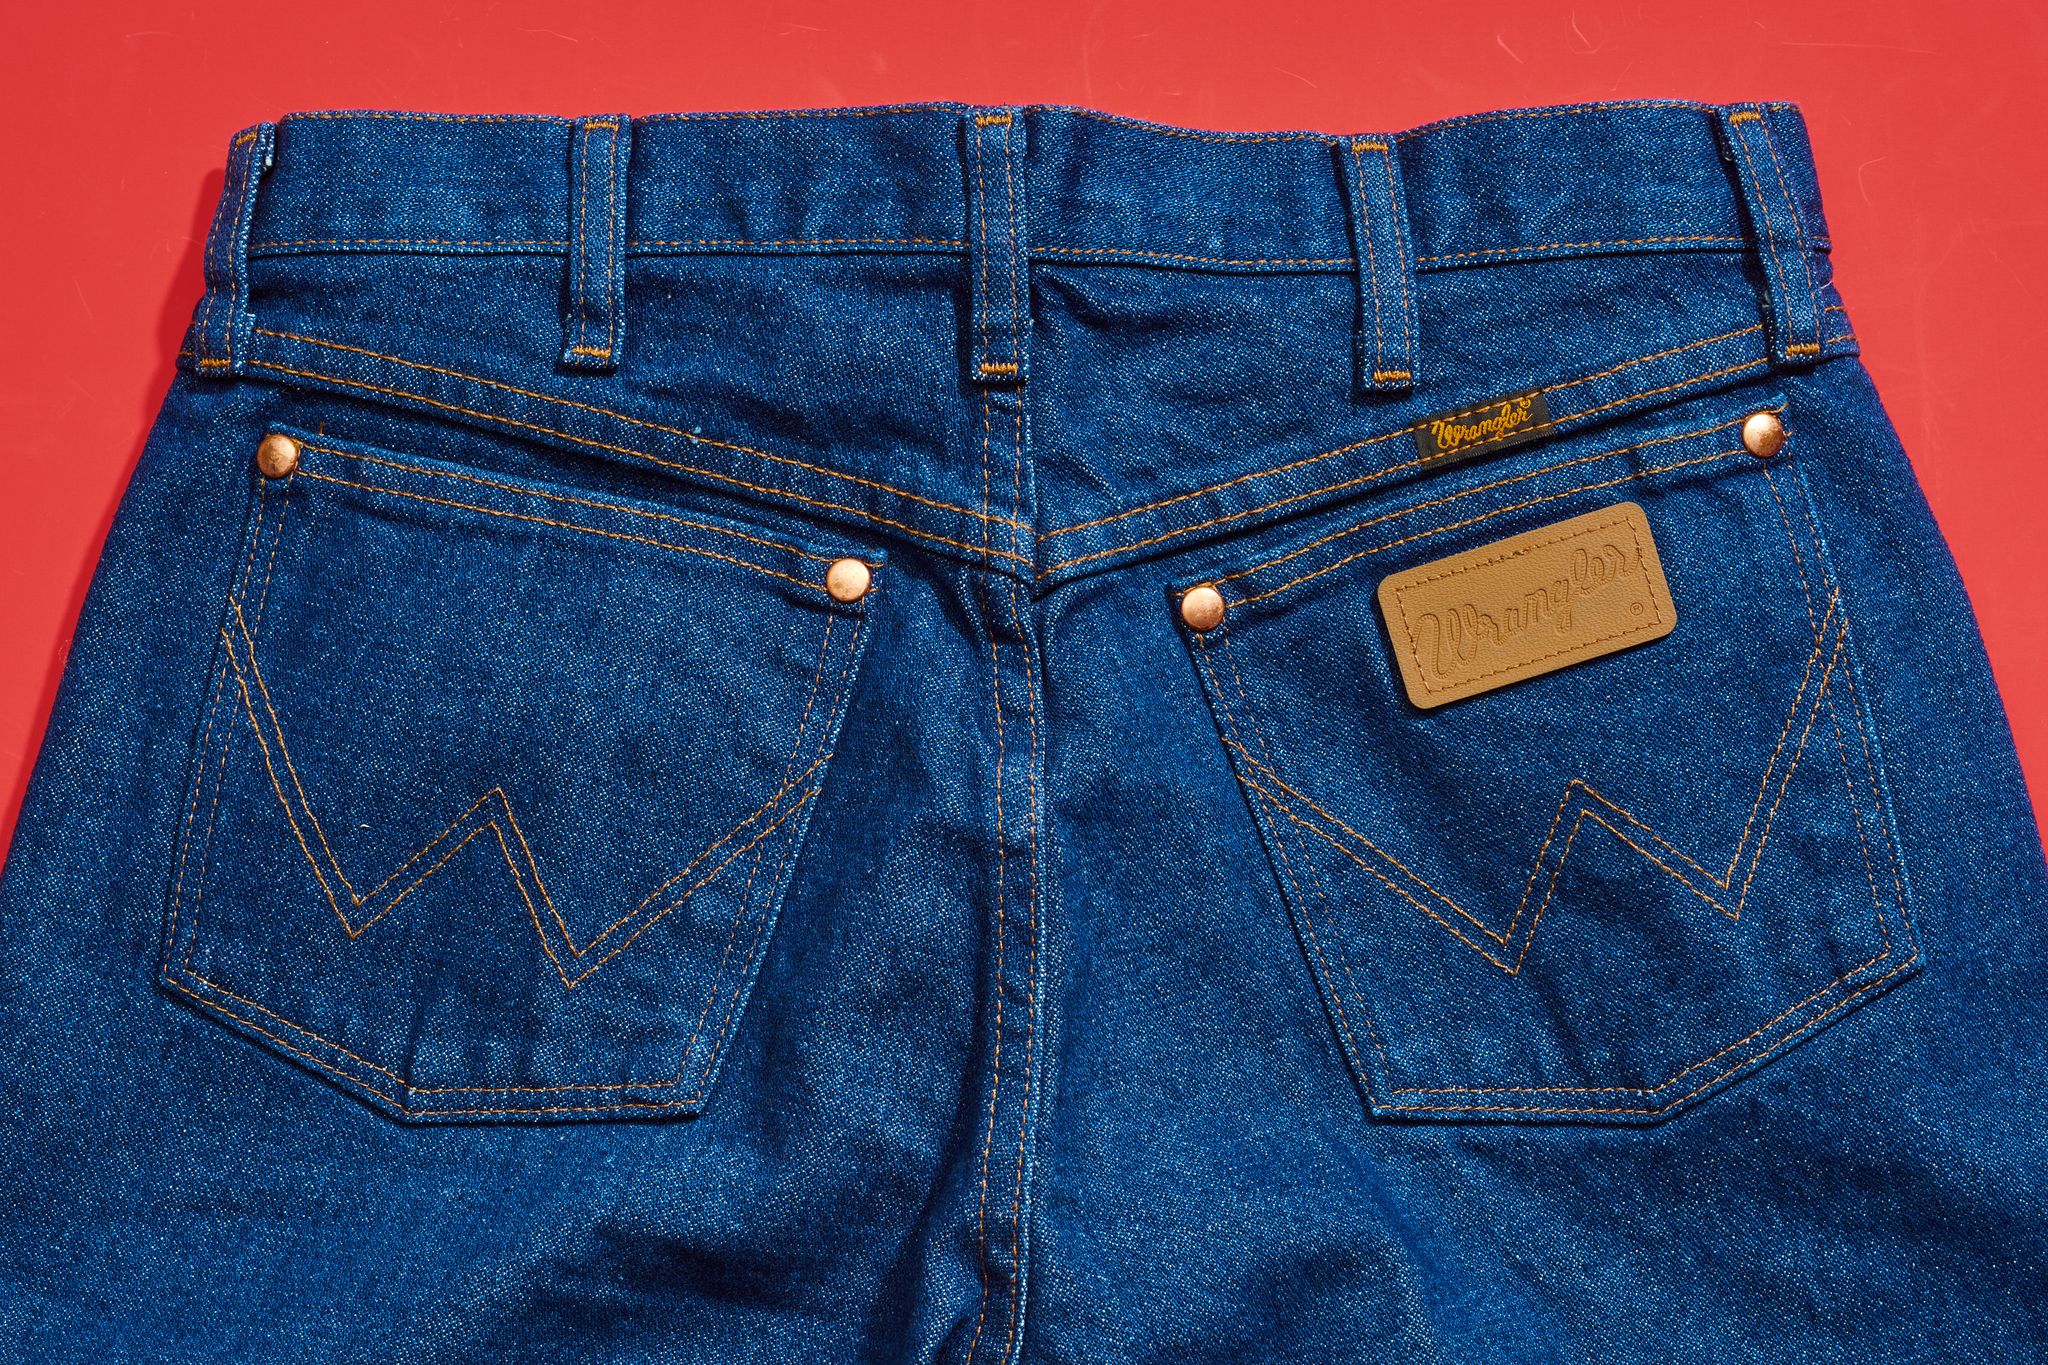 Wrangler Men's Cowboy Cut Regular Fit Bootcut Jeans